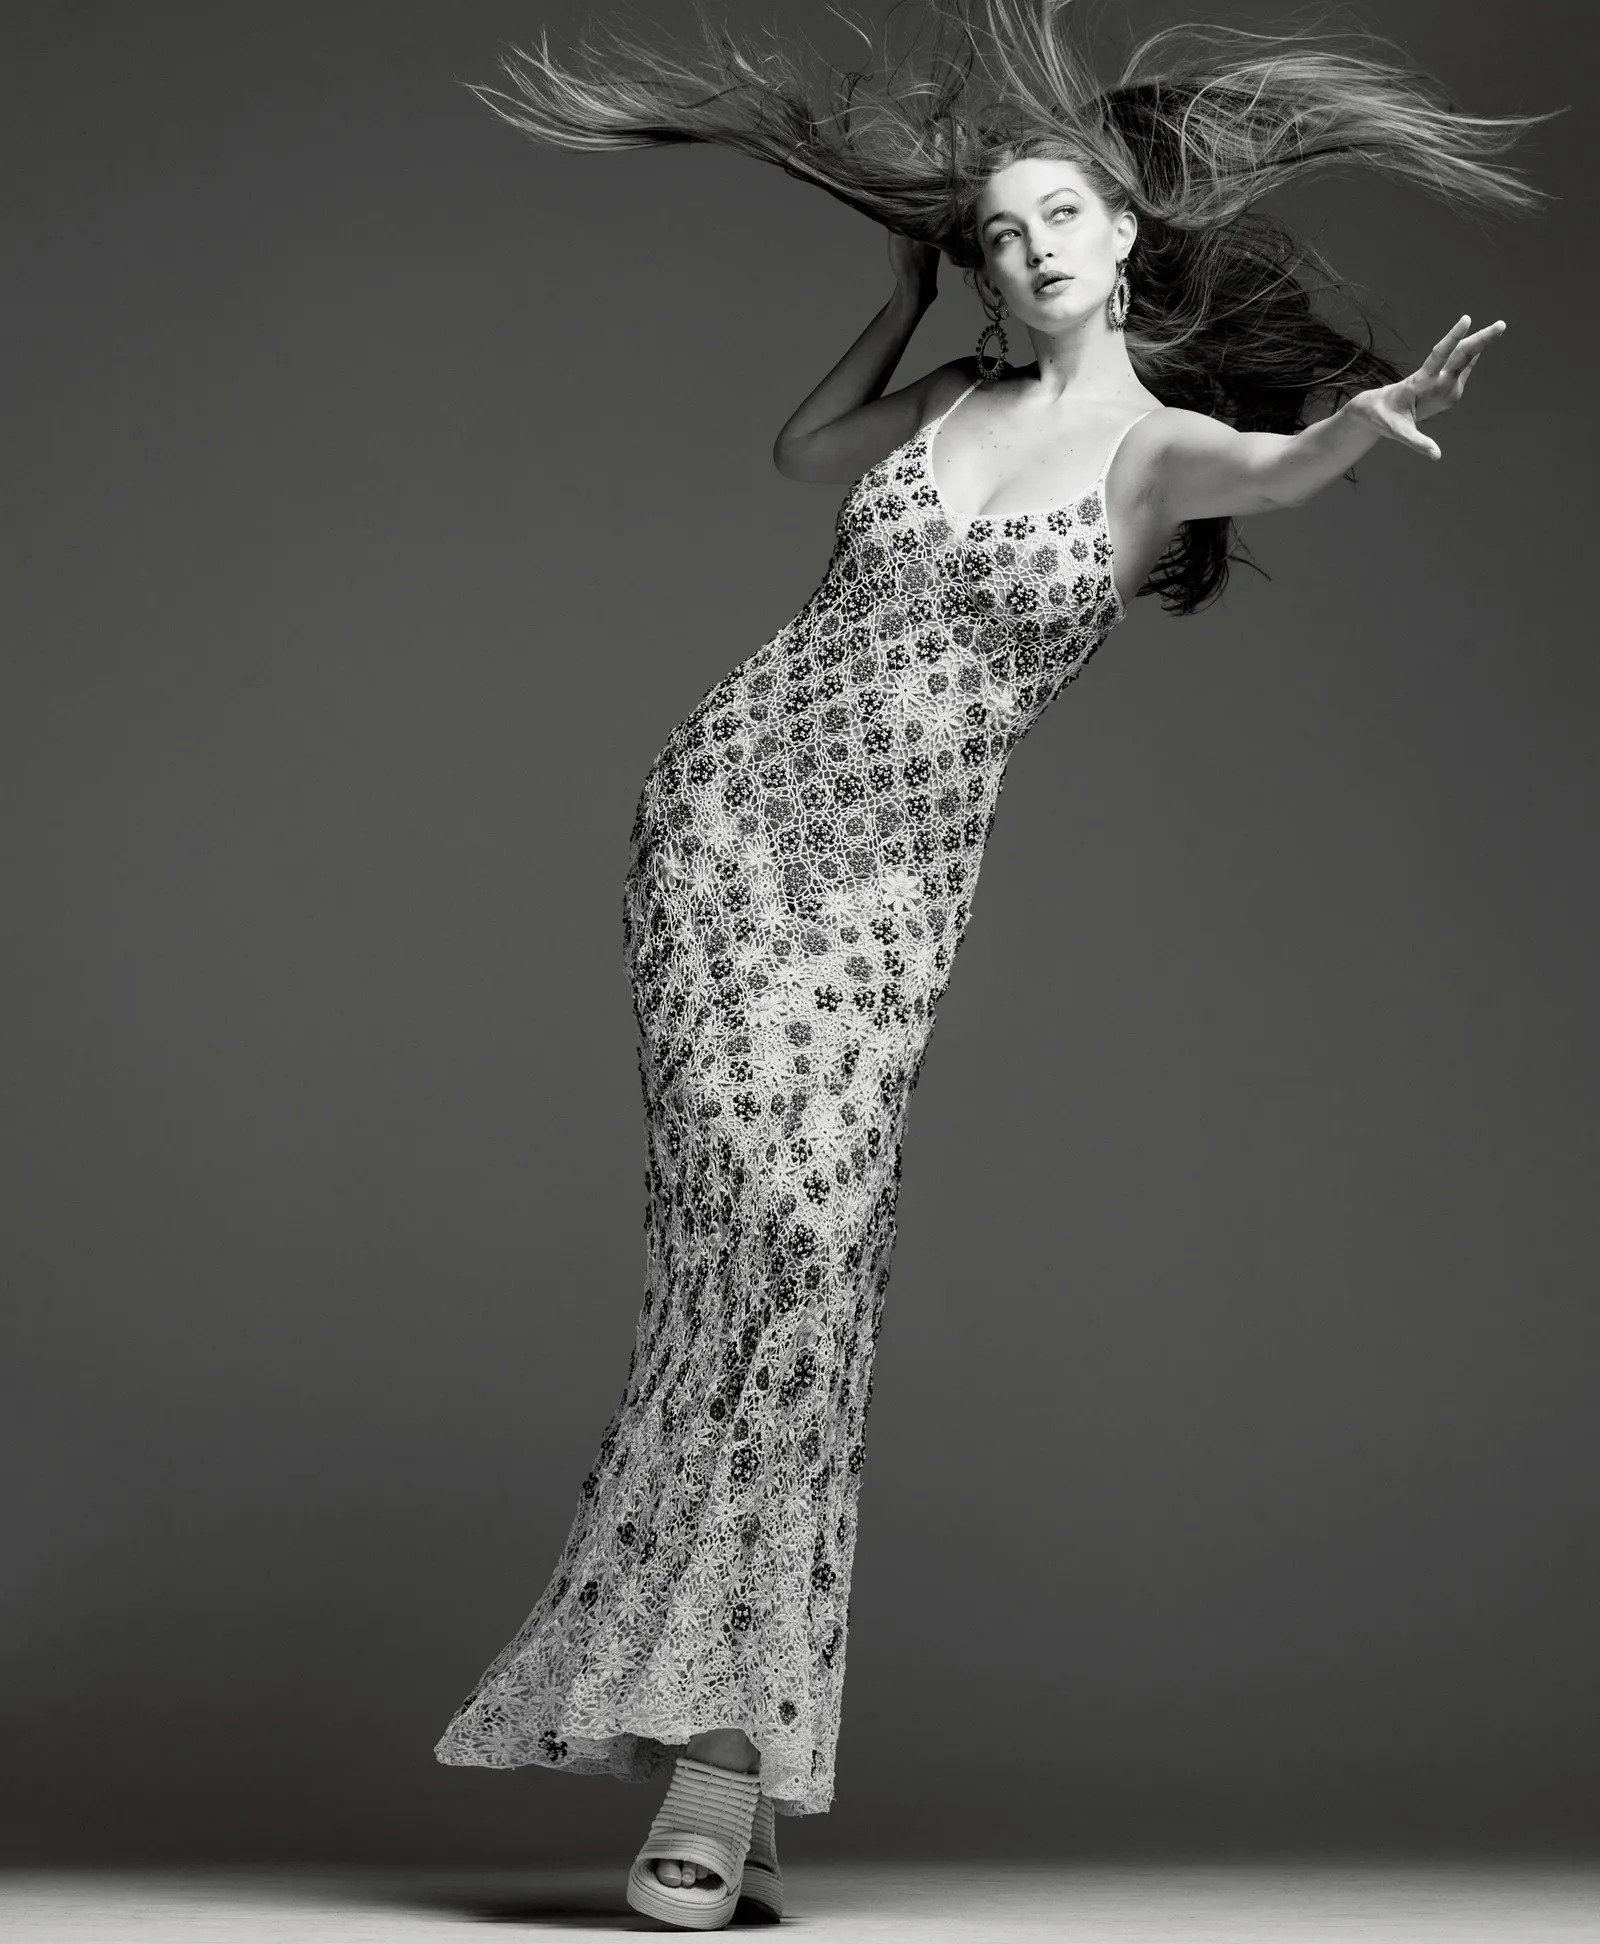 Fotos n°5 : Gigi Hadid est de vuelta en Vogue!